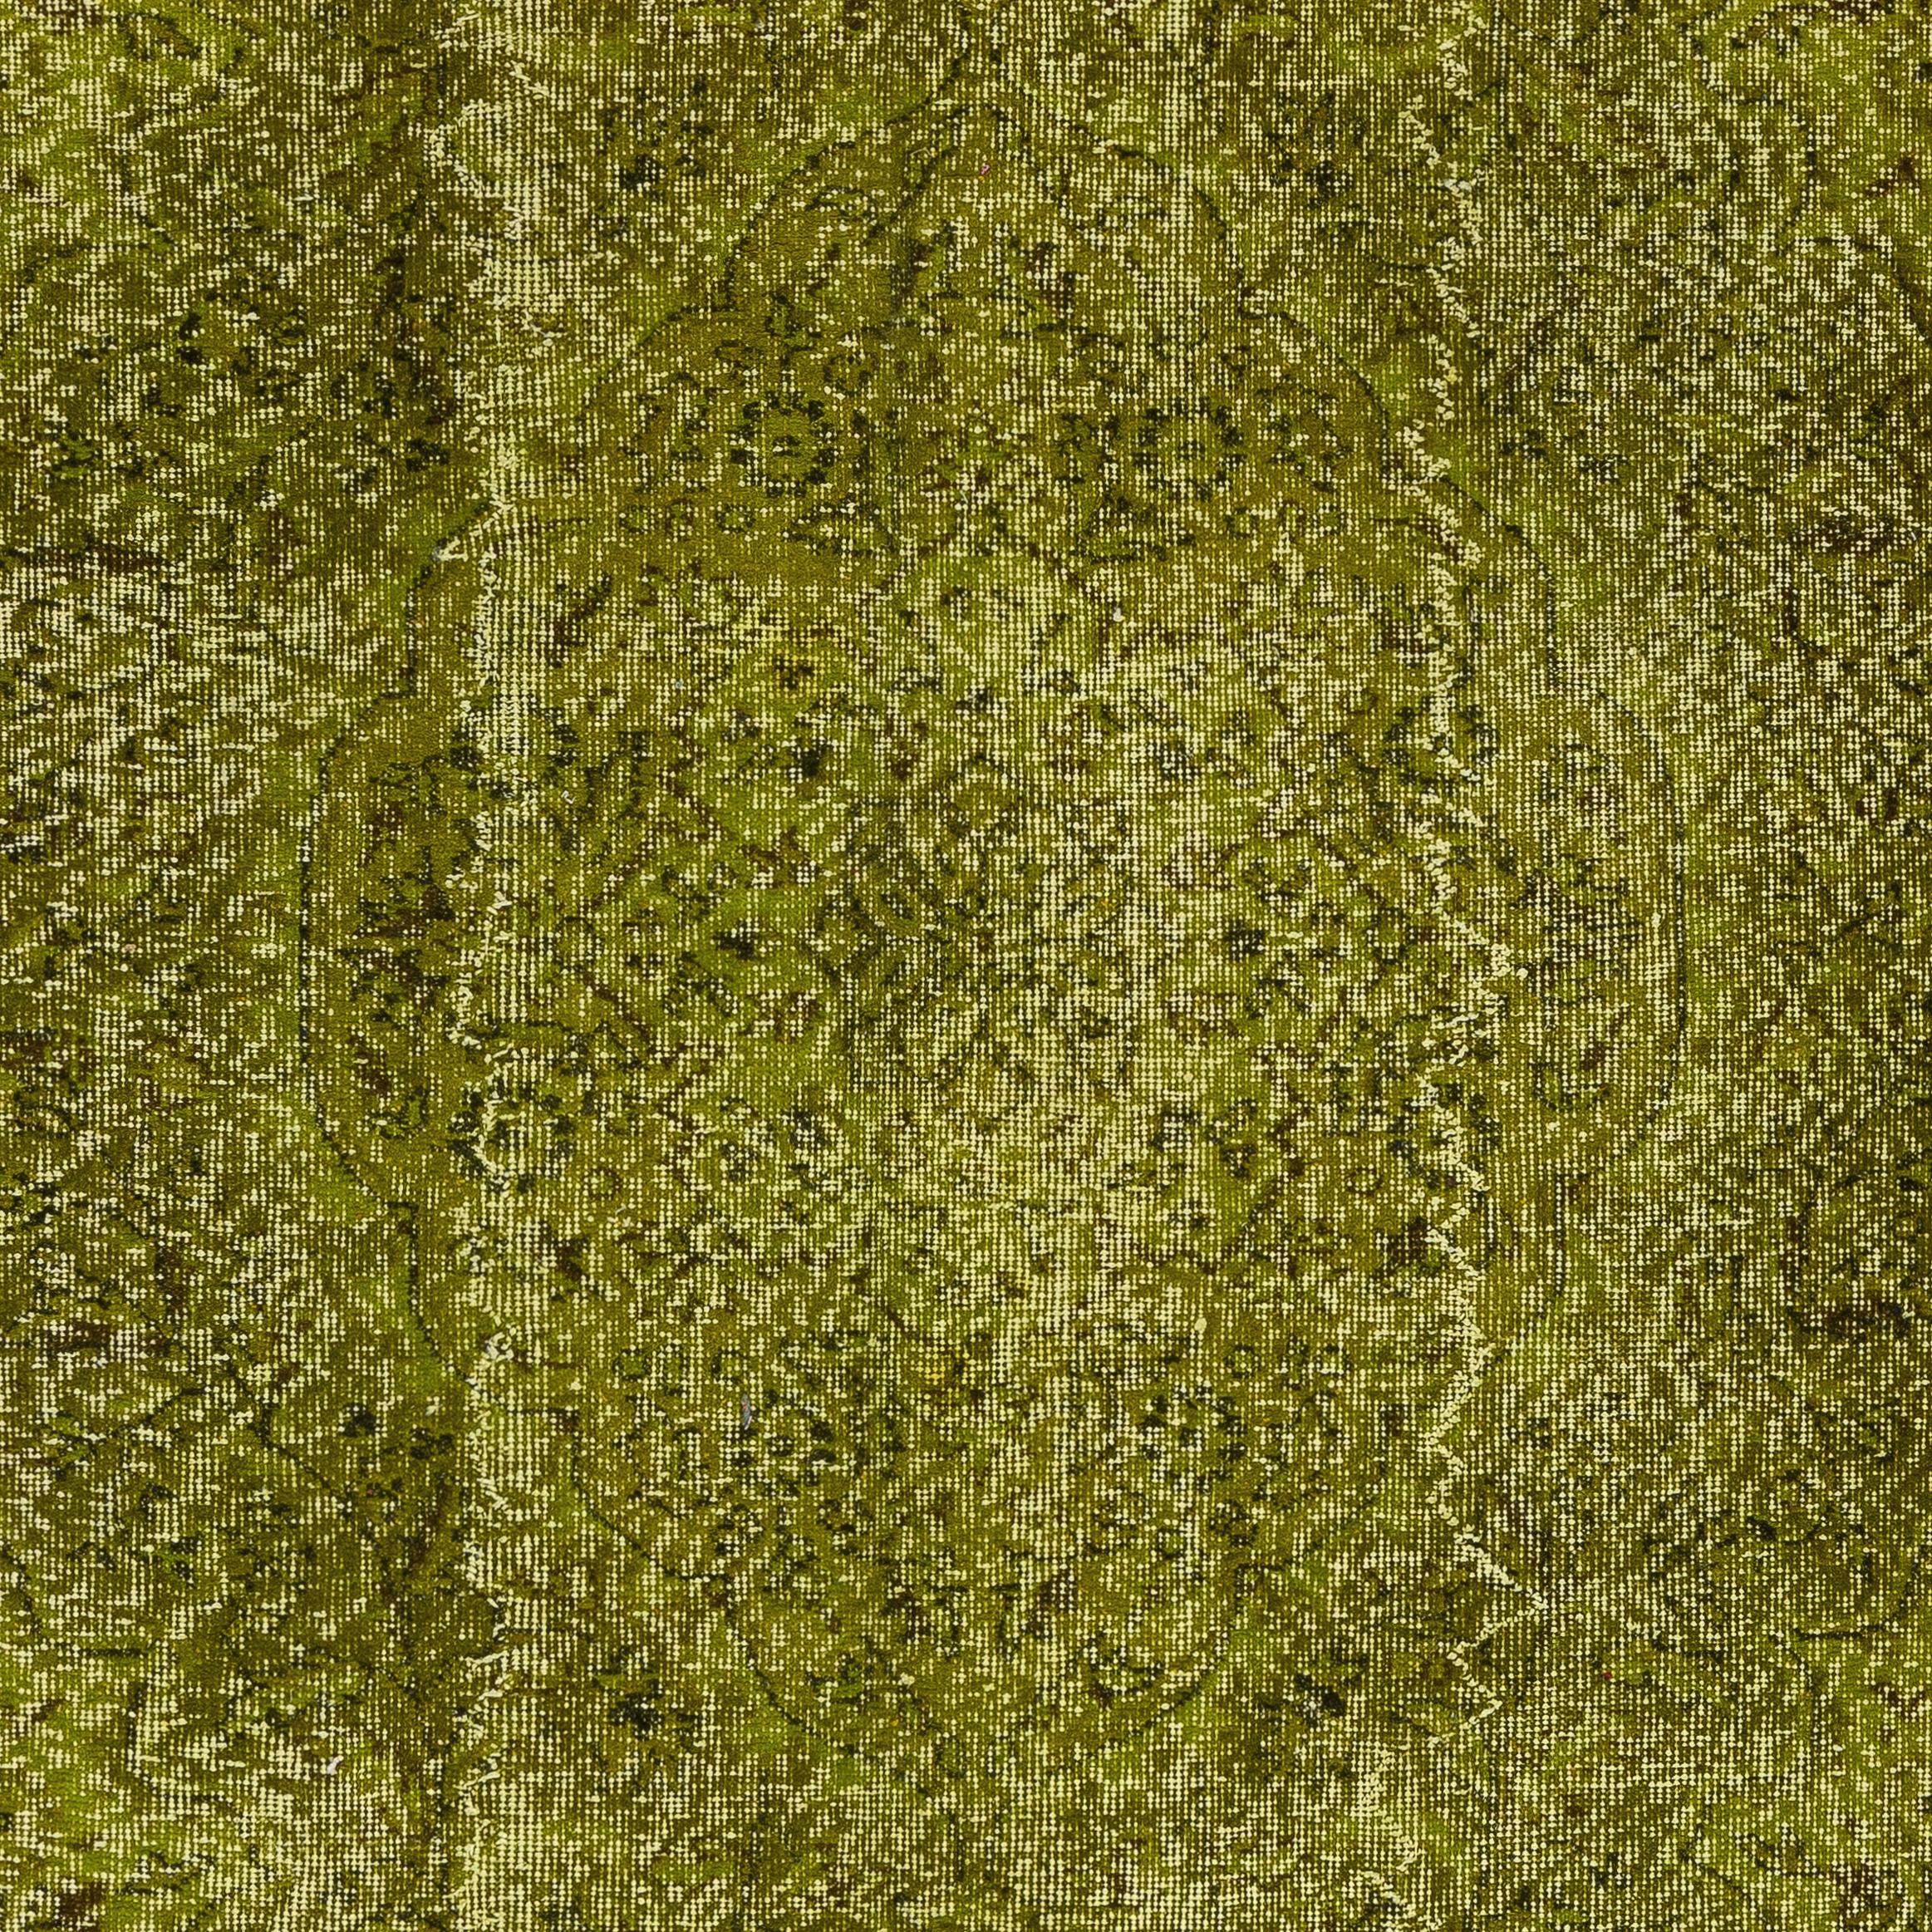 olive green carpets